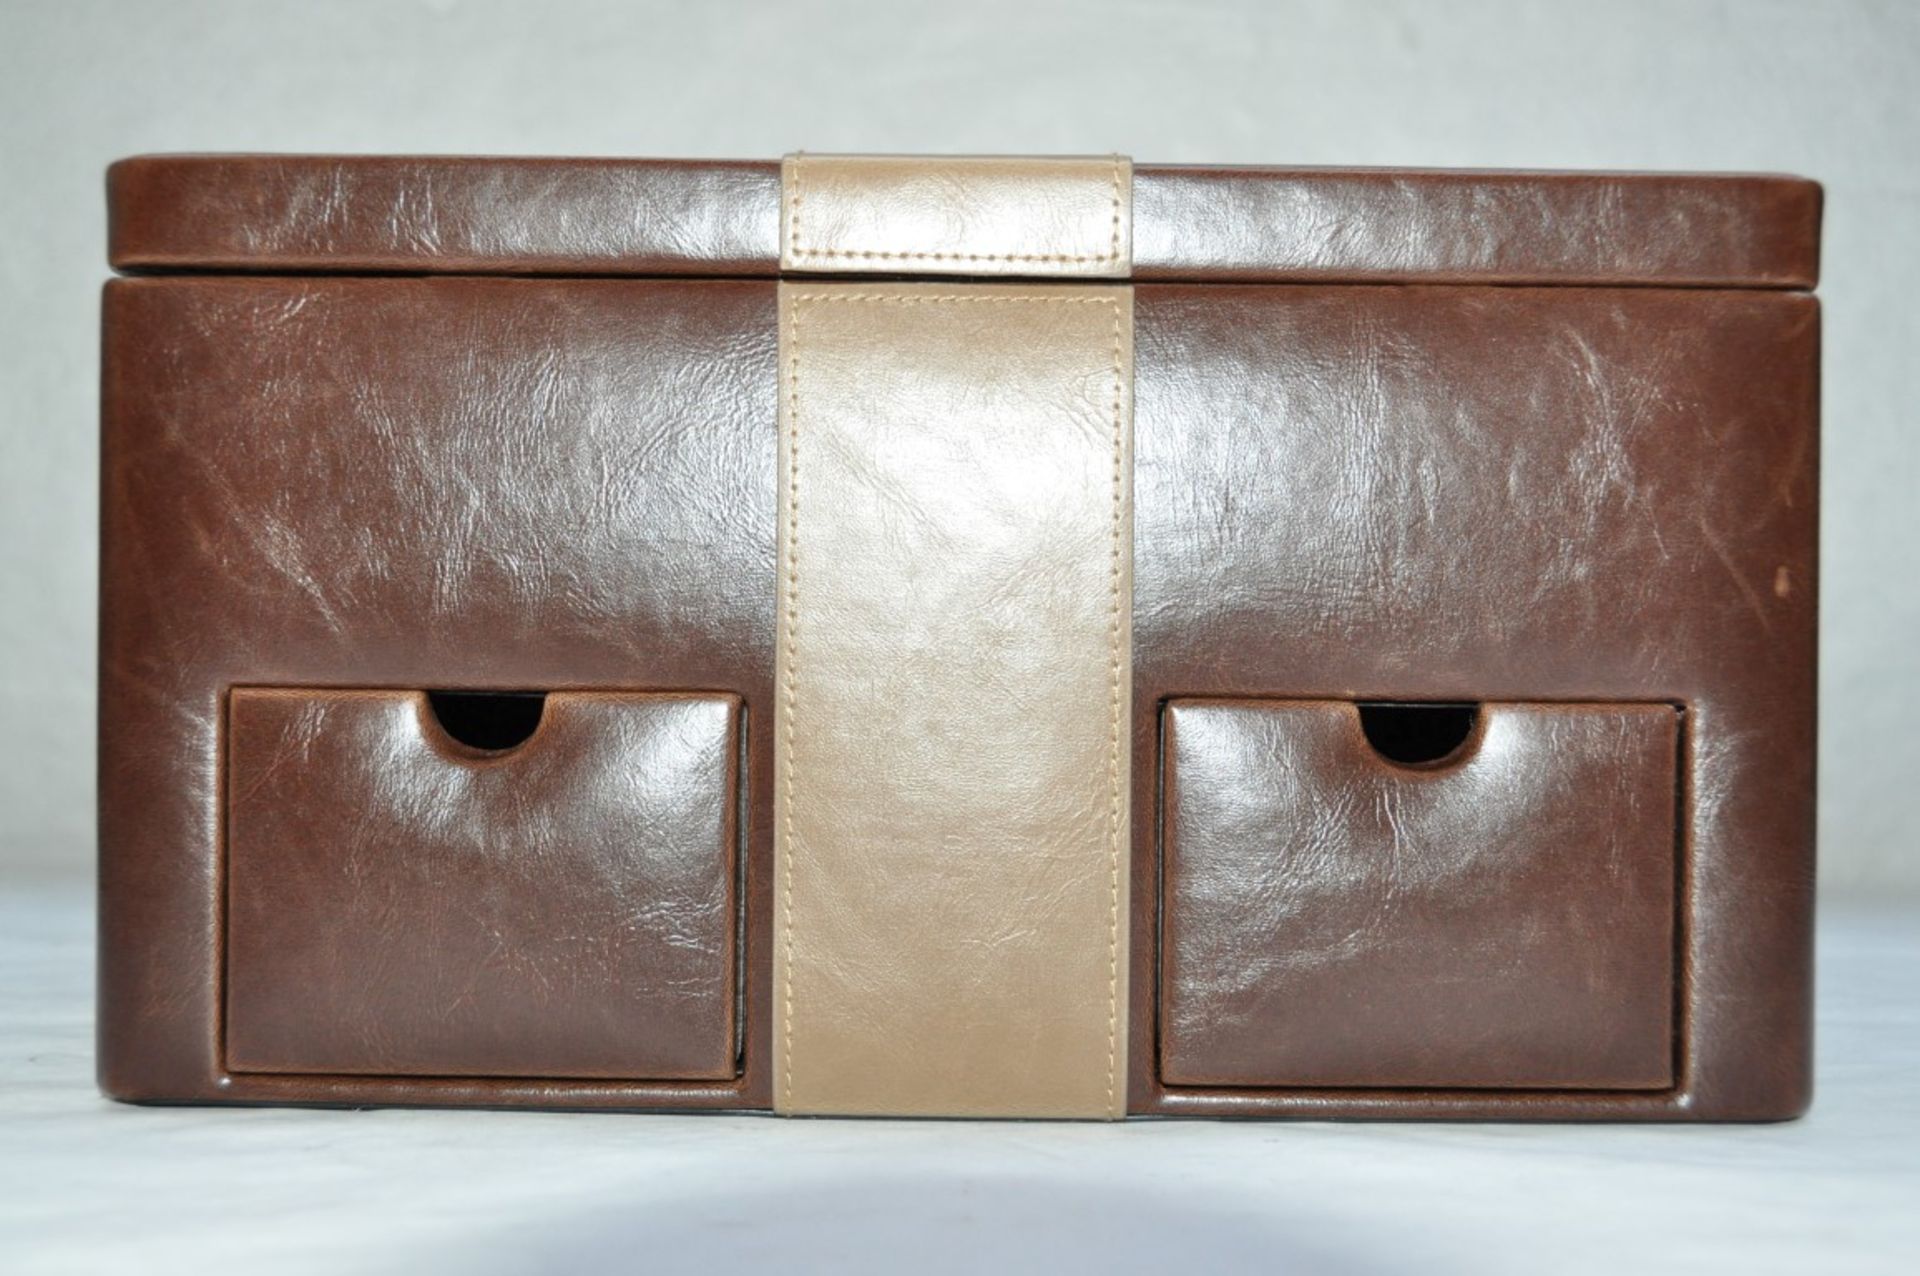 1 x "AB Collezioni" Italian Genuine Leather & Suede Luxury Jewellery Box (34044) - Ref LT000 - - Image 7 of 9